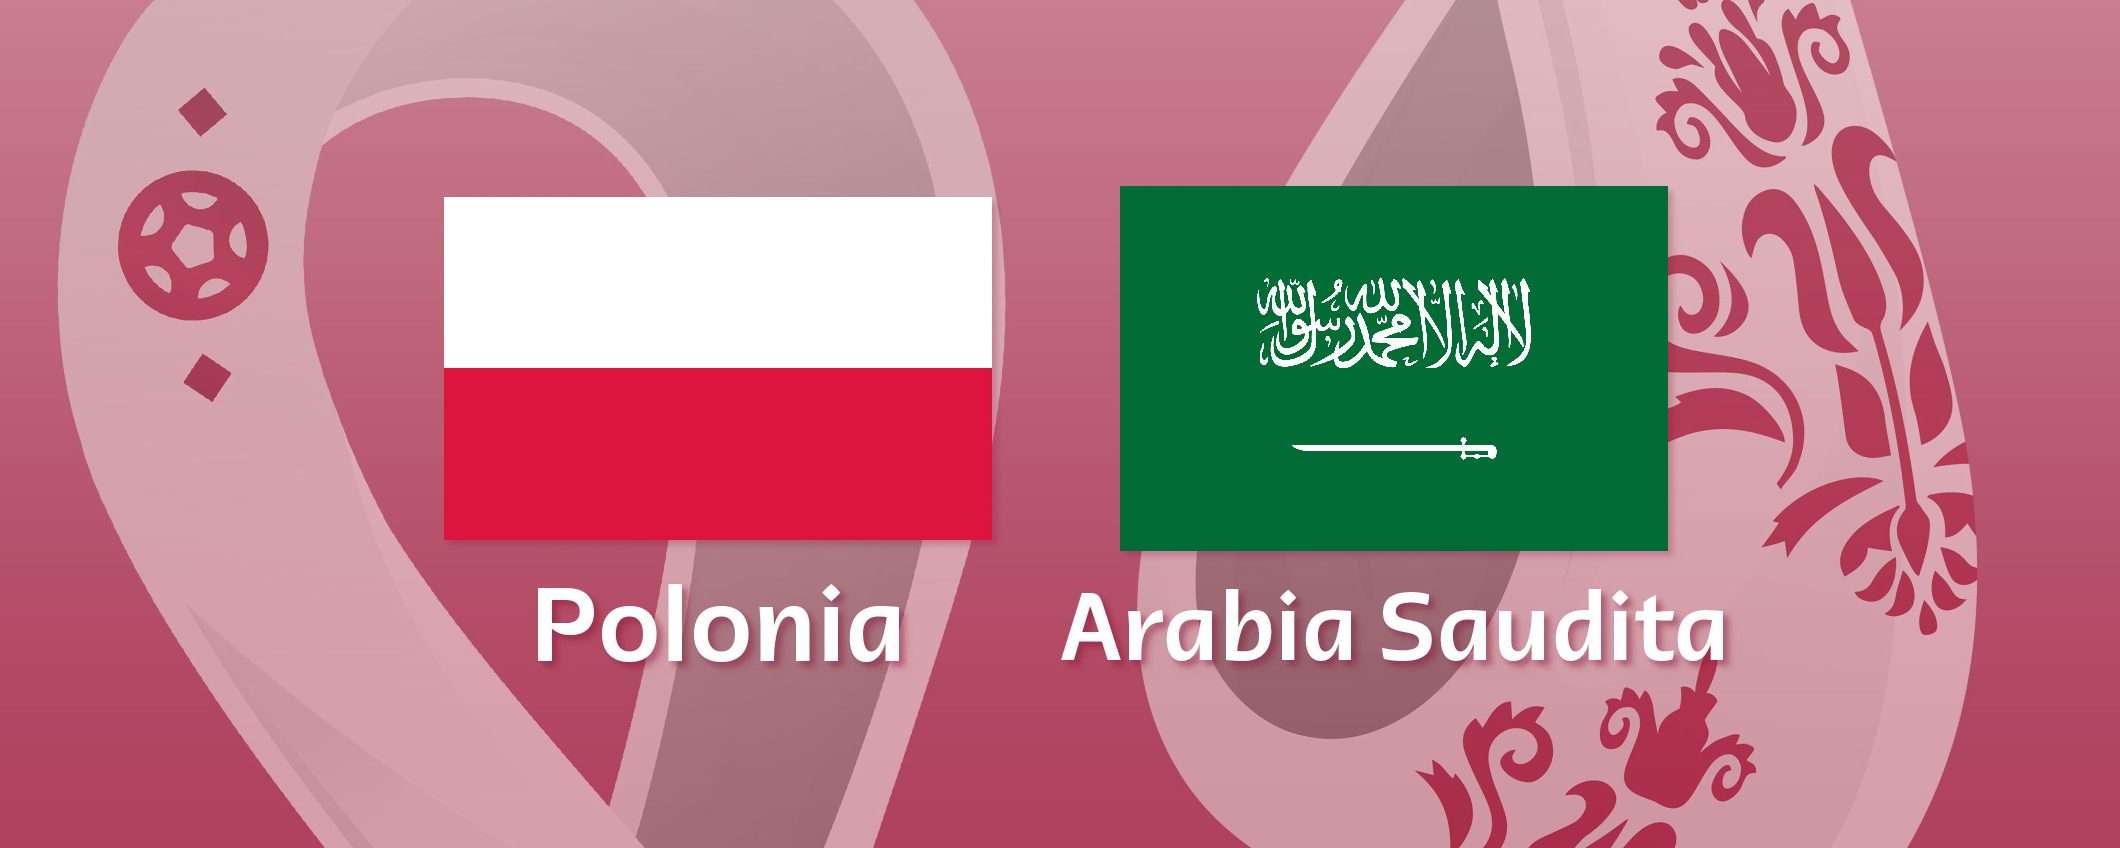 Come vedere Polonia-Arabia Saudita in streaming